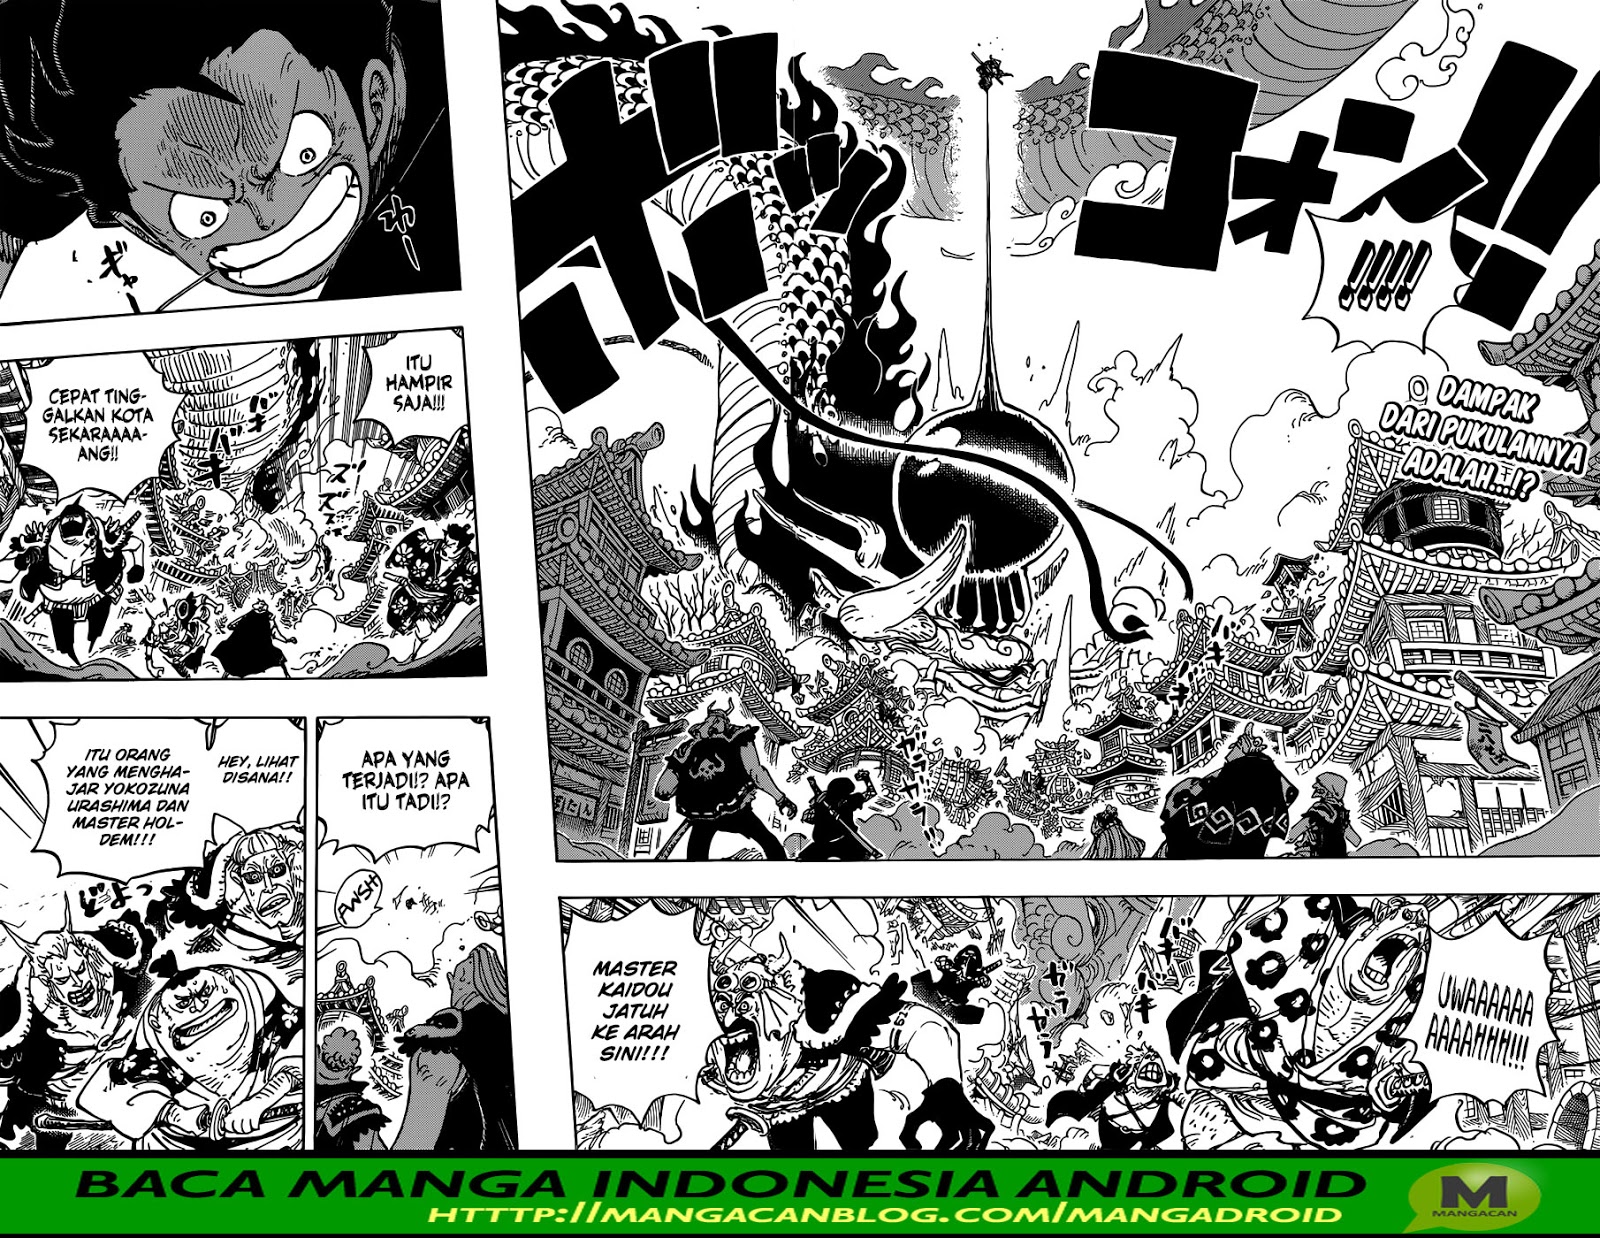 One Piece 923 Indonesia : Yonkou Kaido VS Luffy